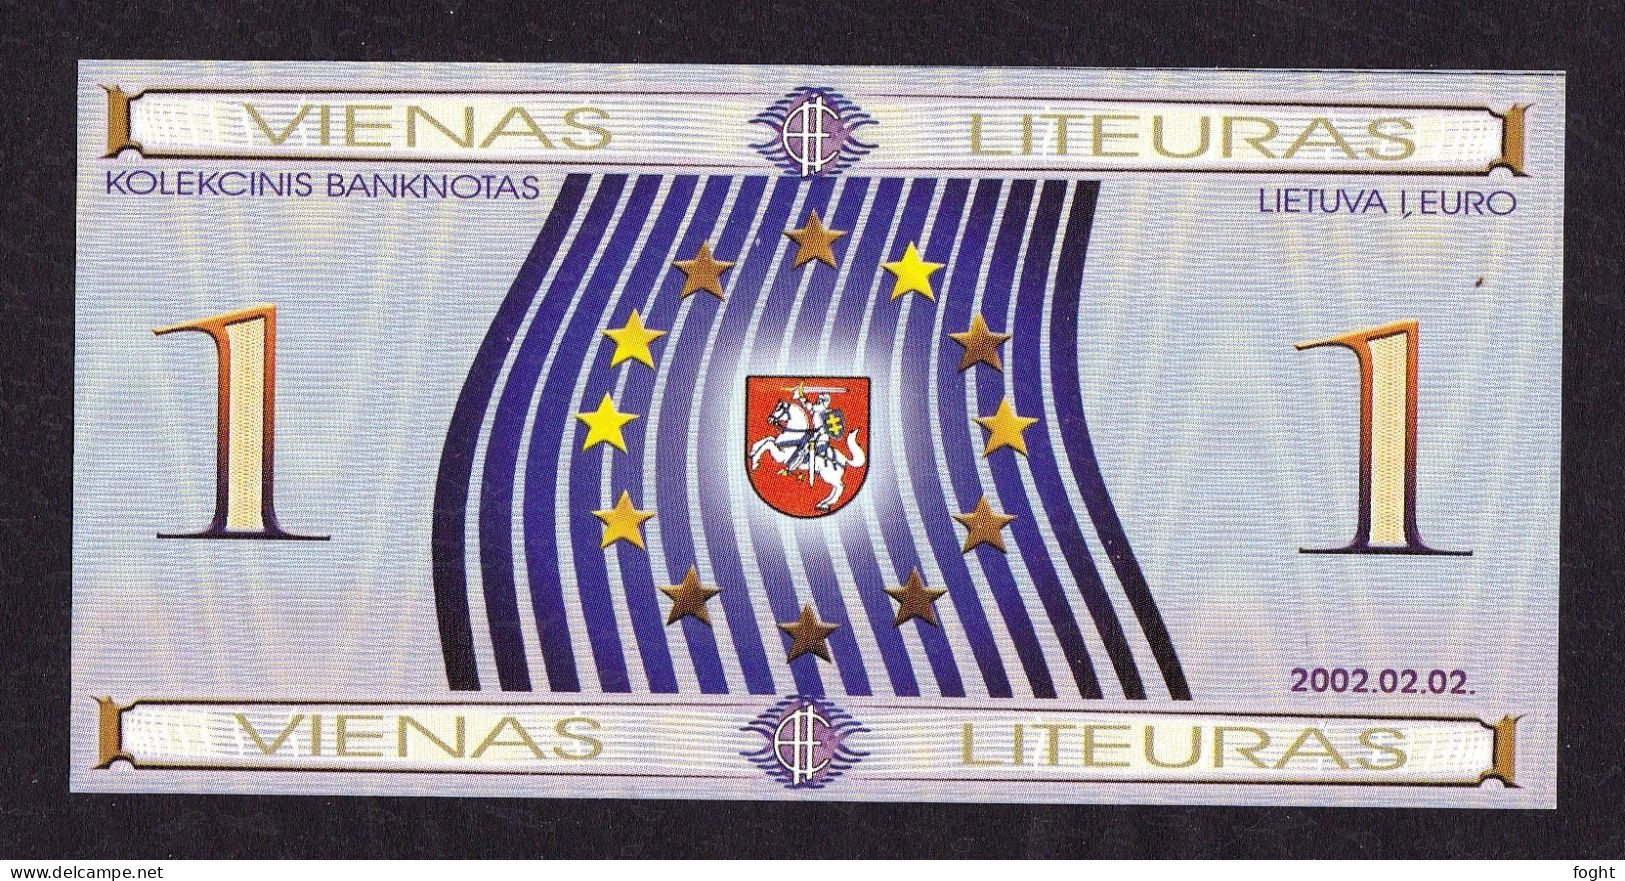 2002 Lithuania Souvenir Bill 1 Liteuras - Lithuania